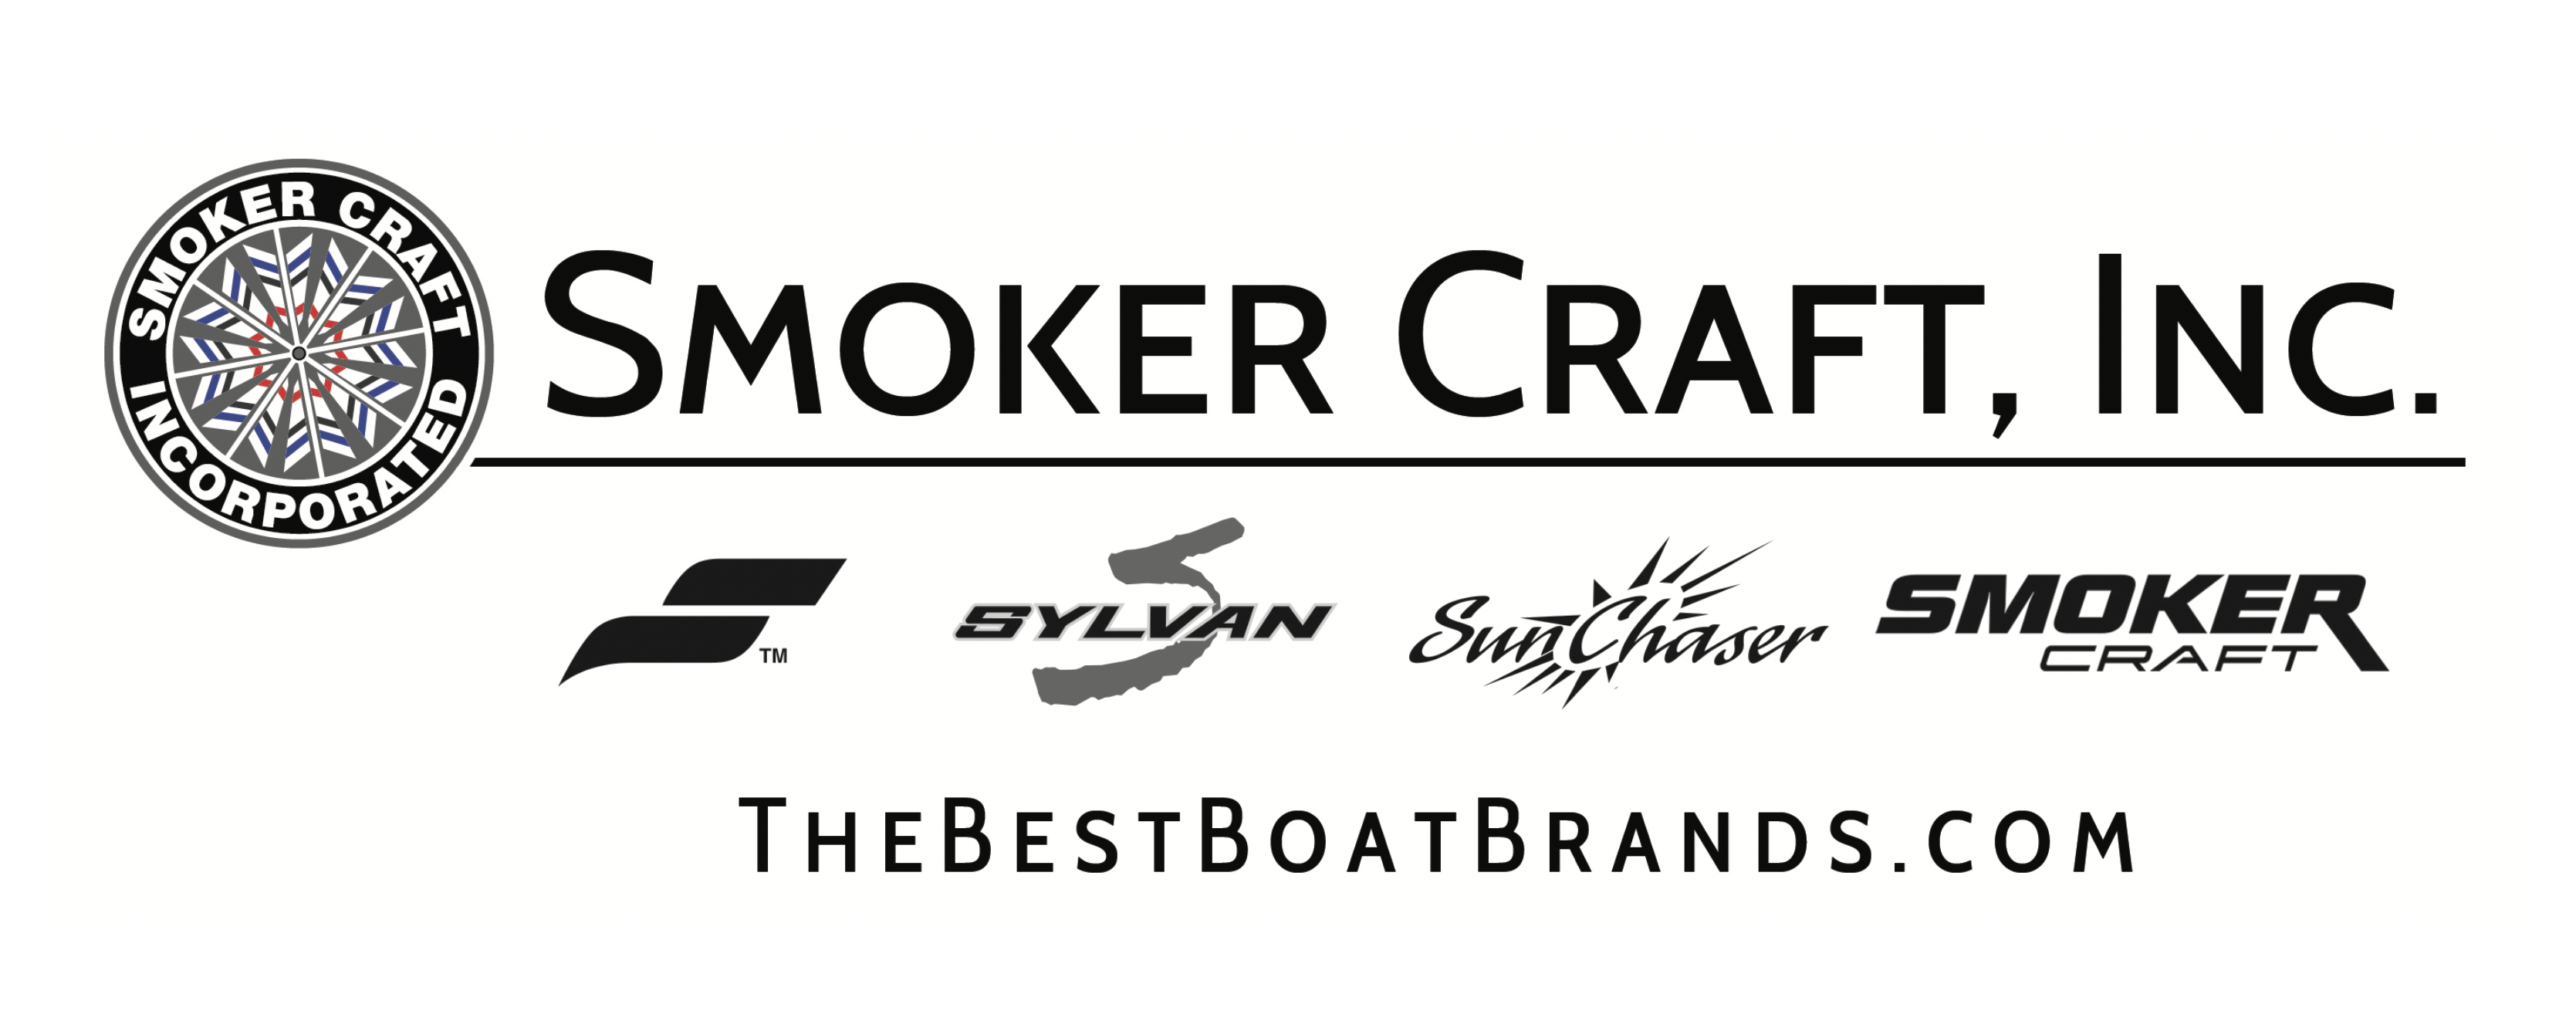 Smoker Craft Inc. Family of Brands